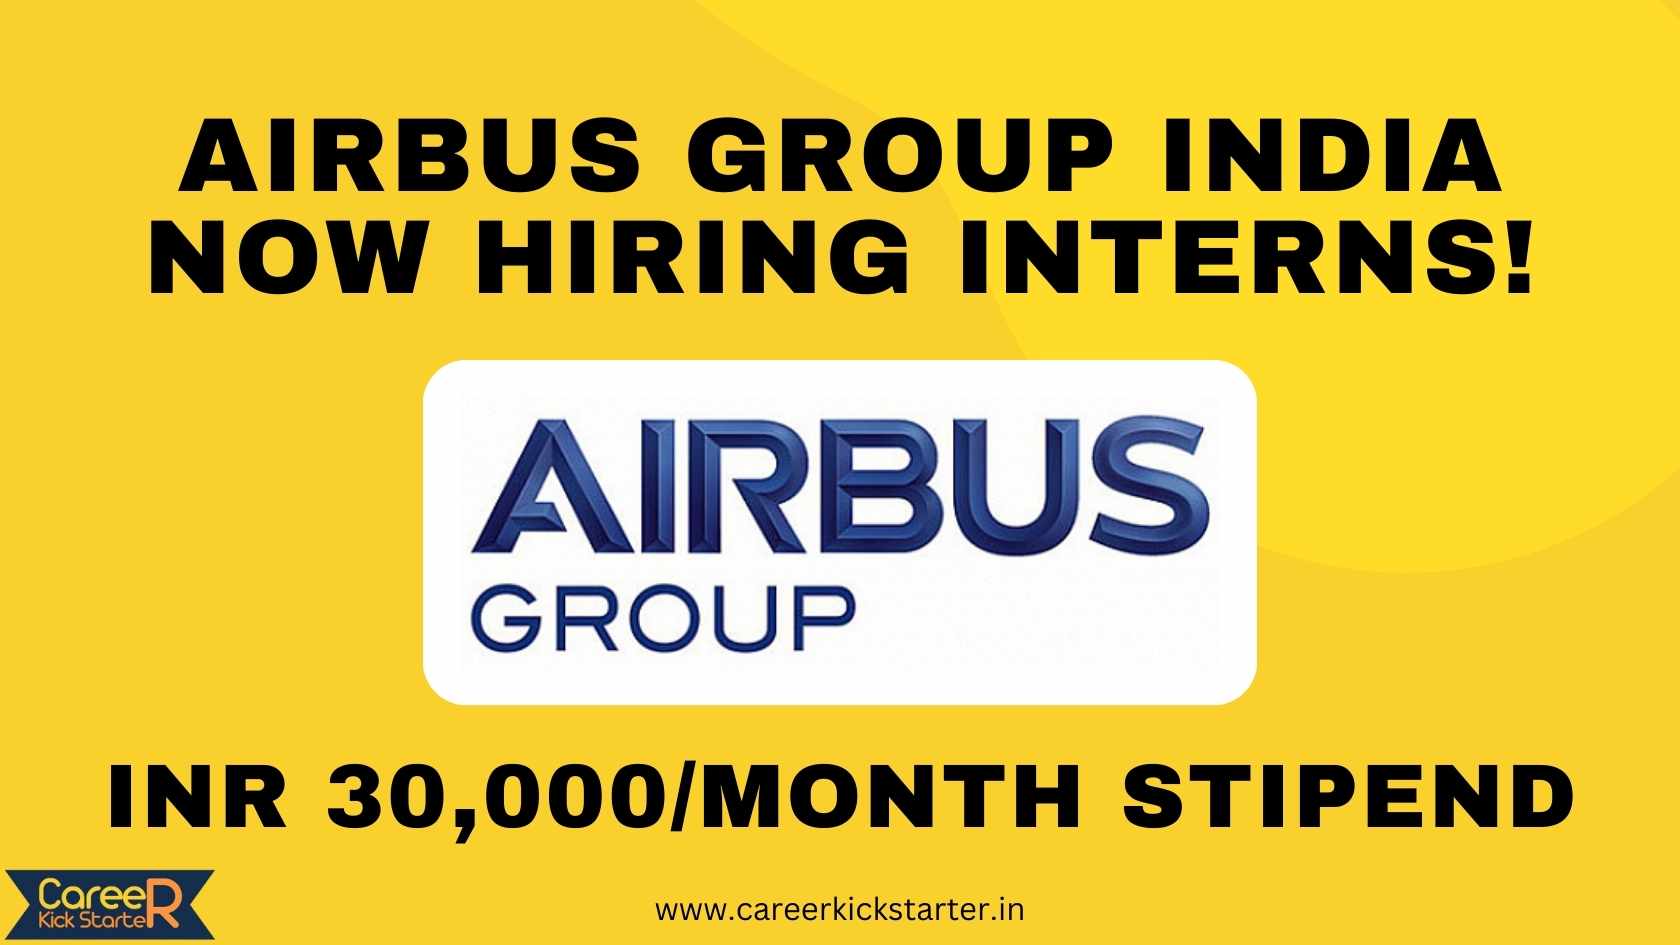 Airbus Group India Internship in Banglore